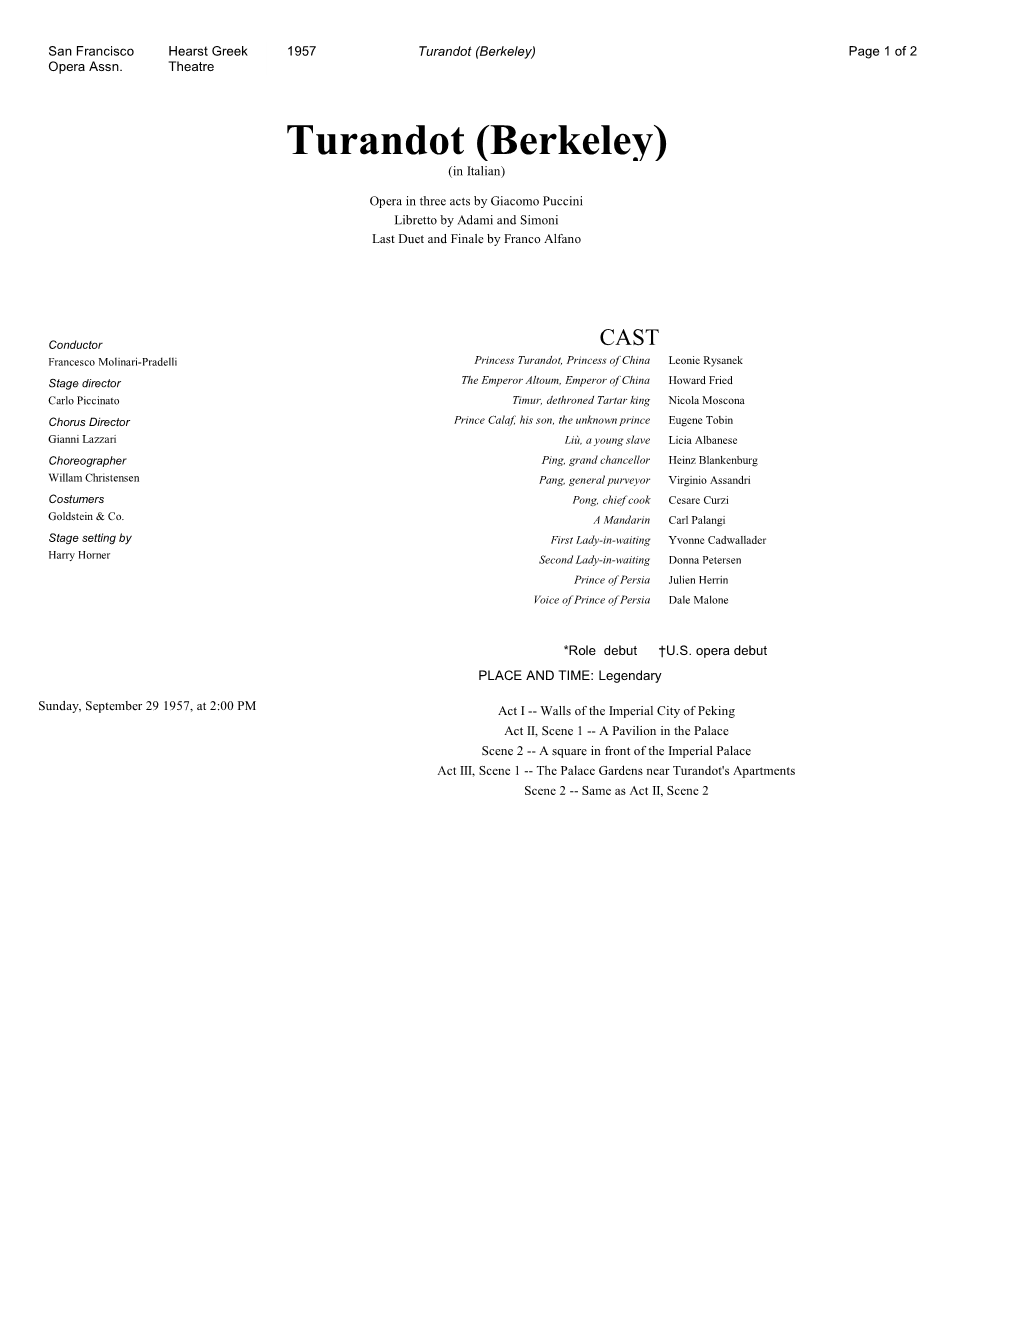 Turandot (Berkeley) Page 1 of 2 Opera Assn